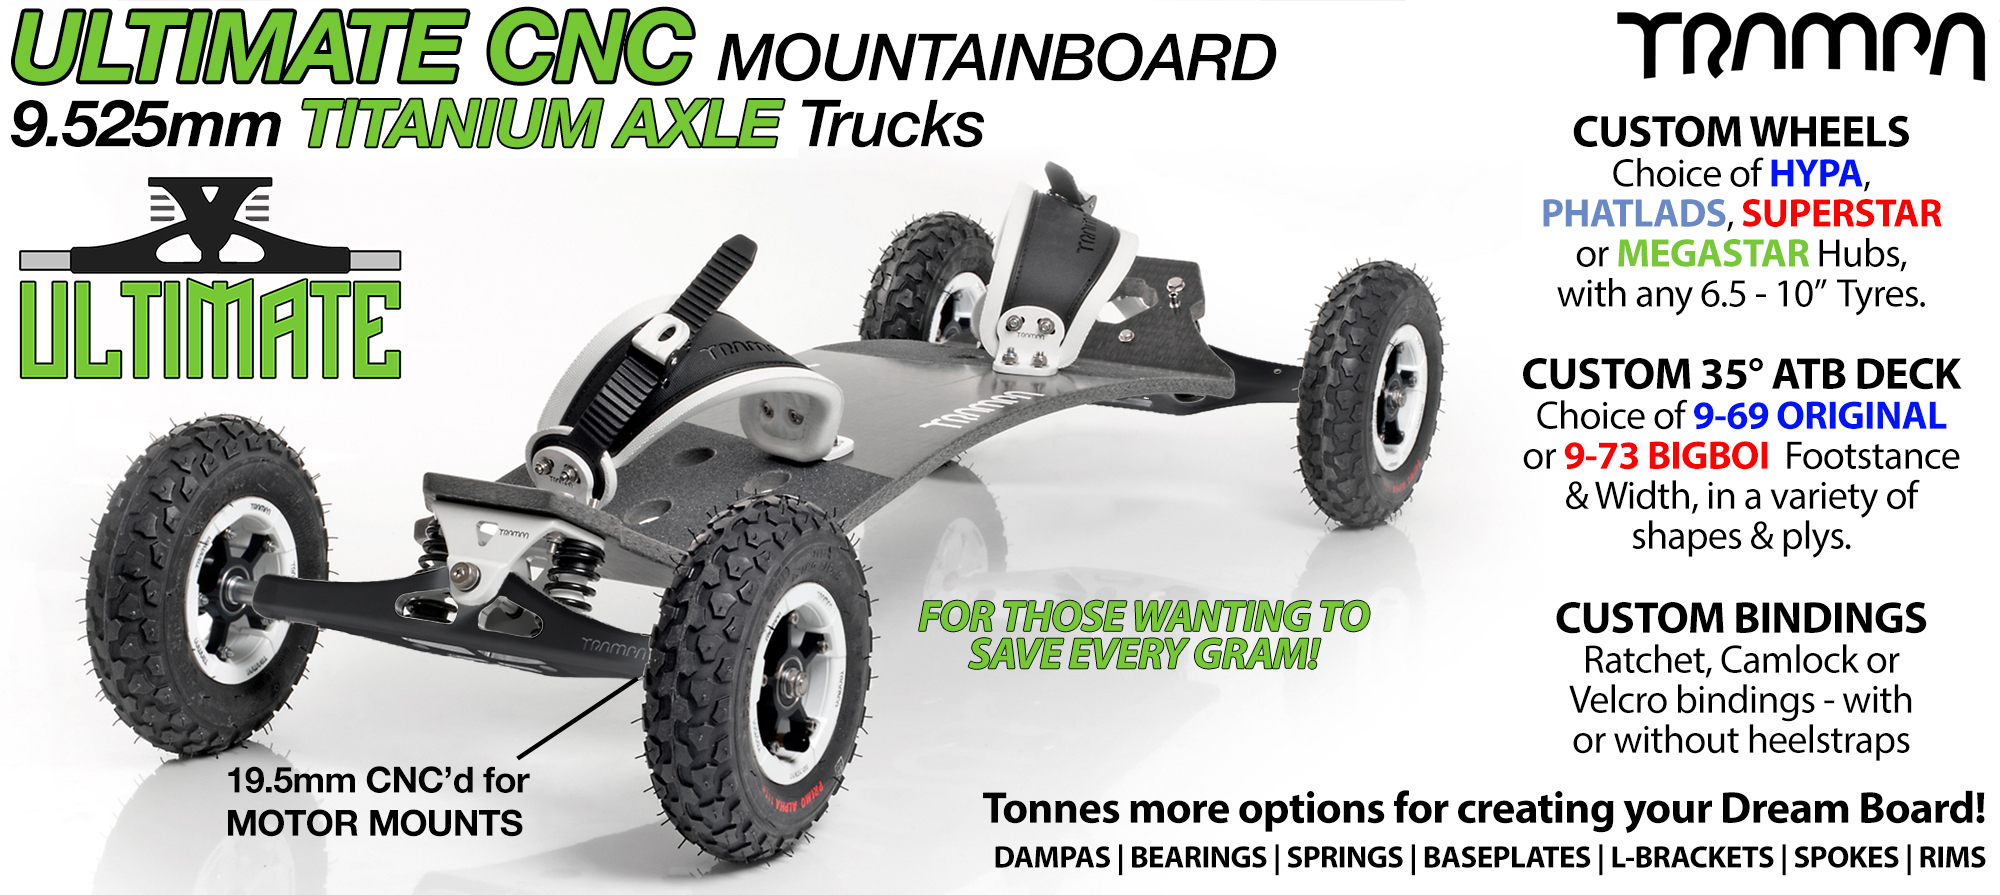 TRAMPA Mountainboard with 9.525mm TITANIUM Axle ULTIMATE Trucks RATCHET Bindings & Custom Wheels